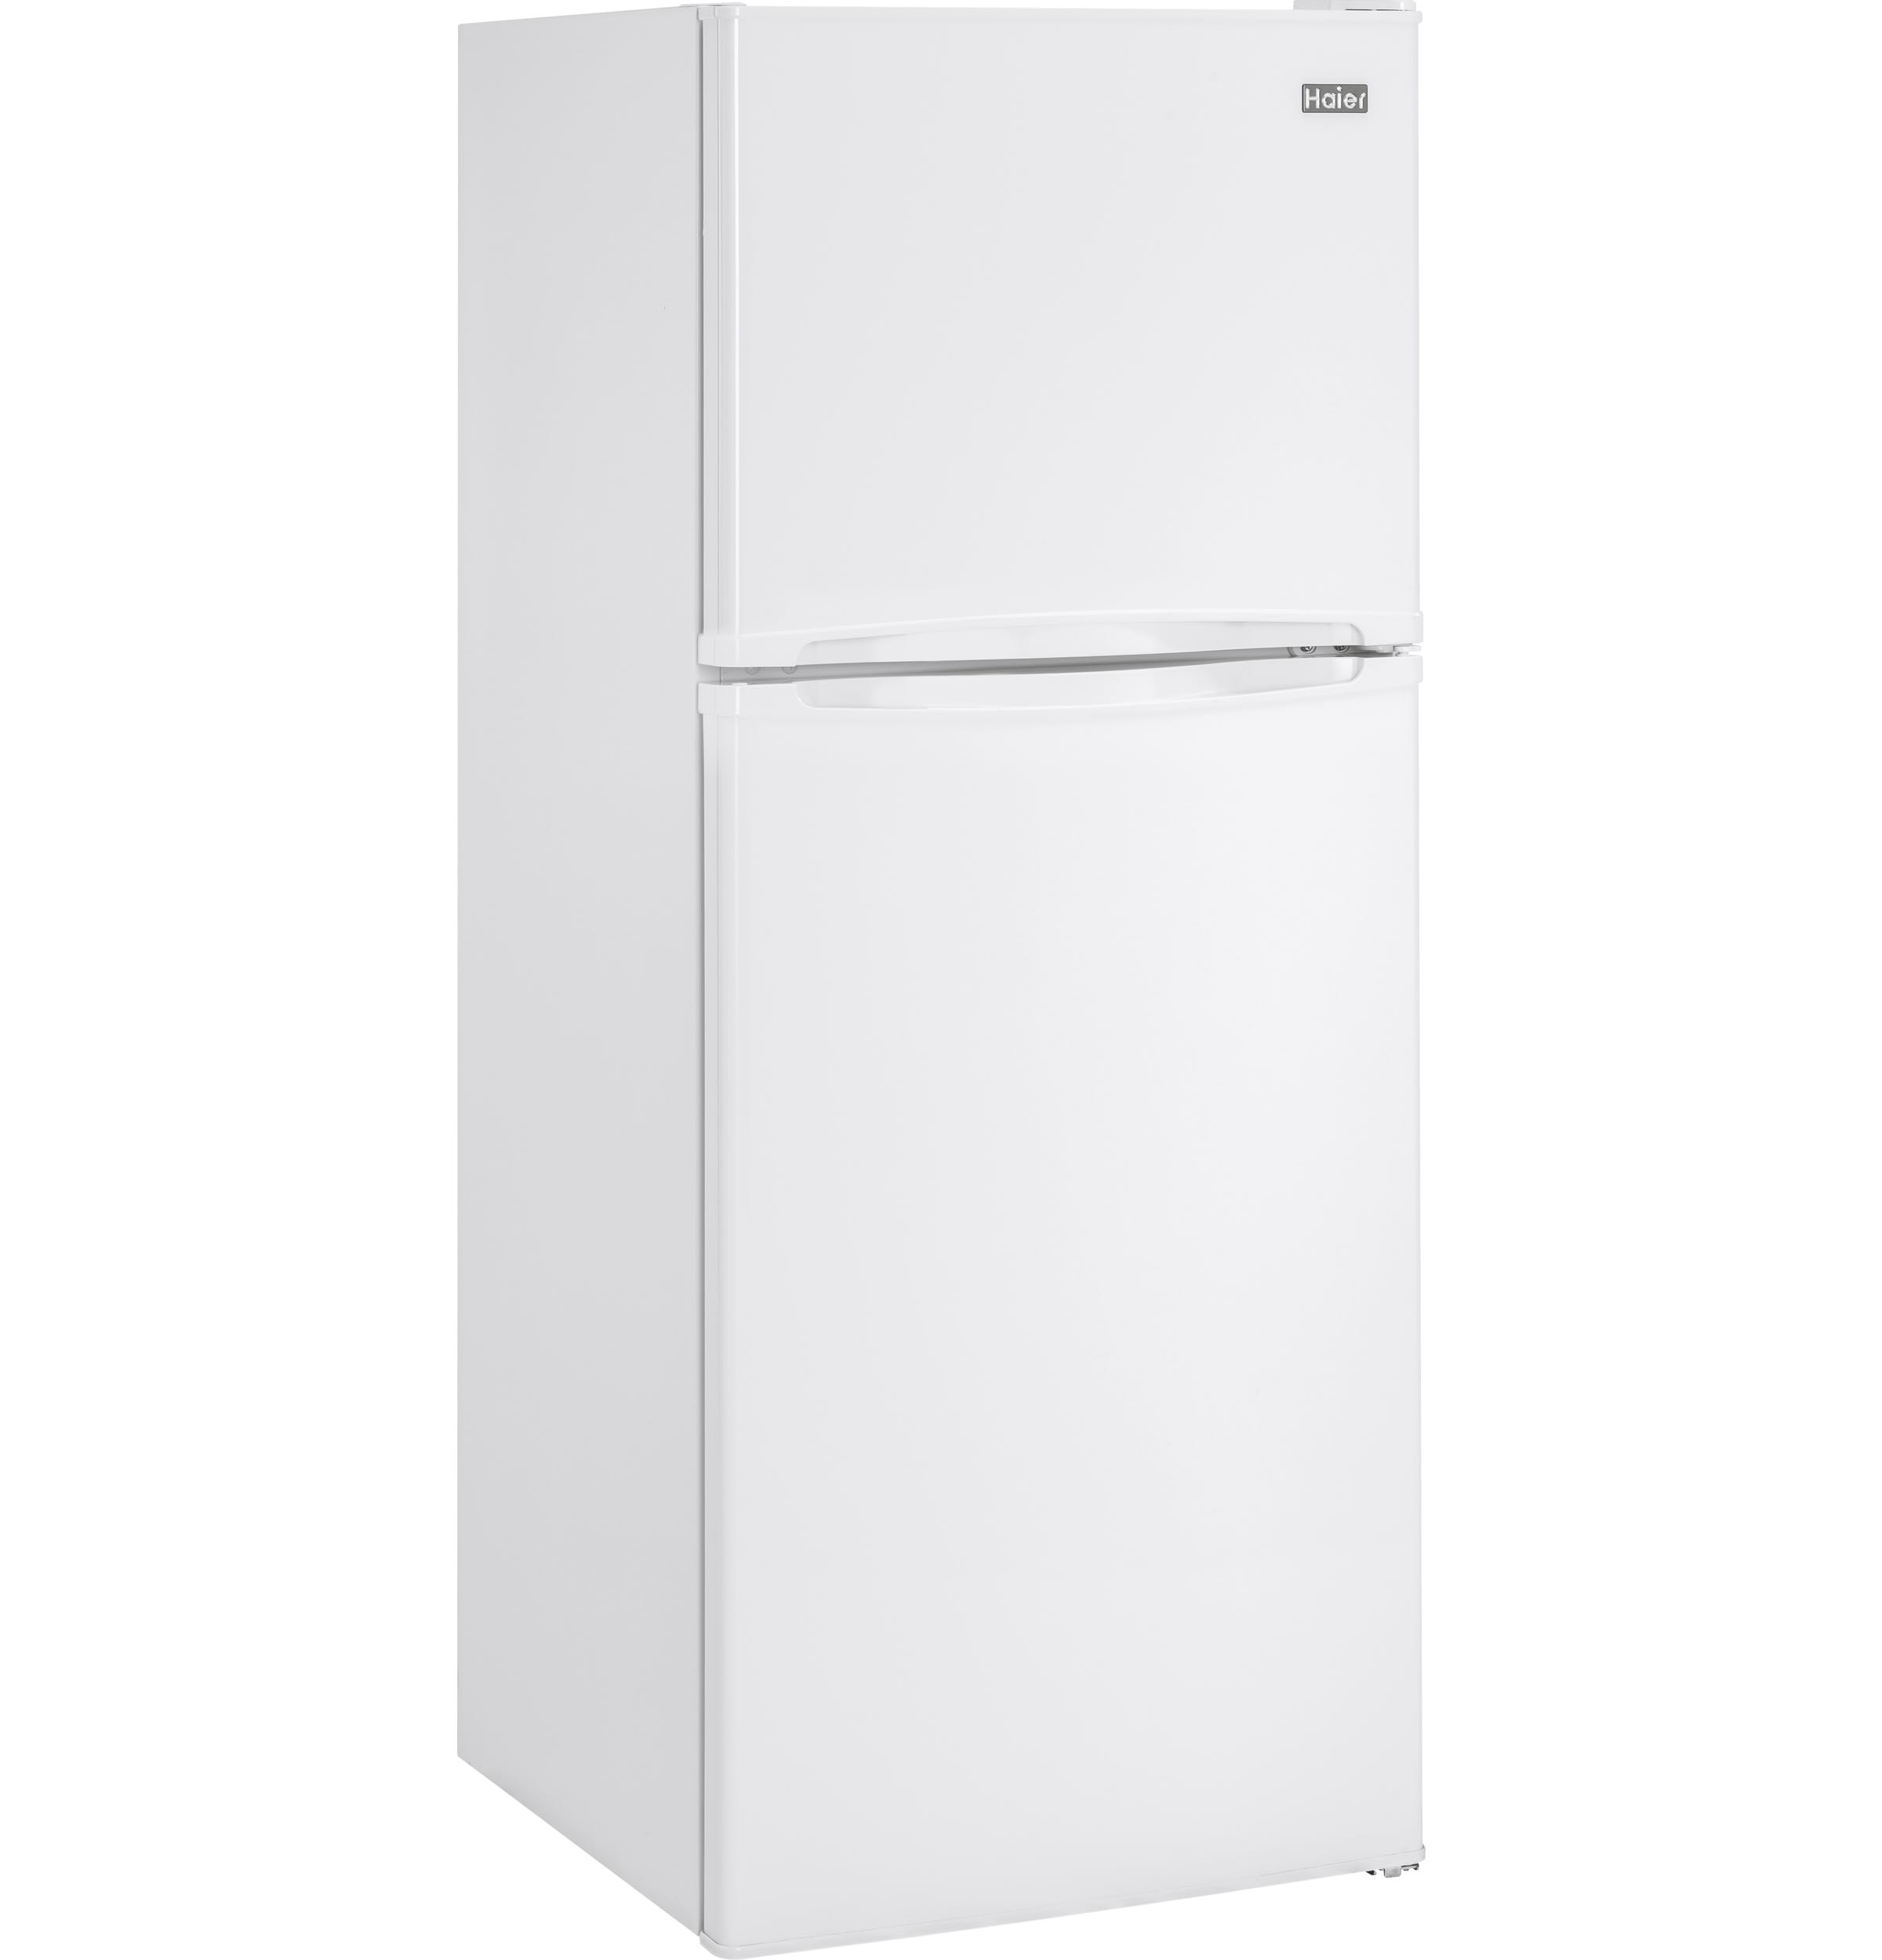 HA10TG21SS by Haier - 9.8 Cu. Ft. Top Freezer Refrigerator